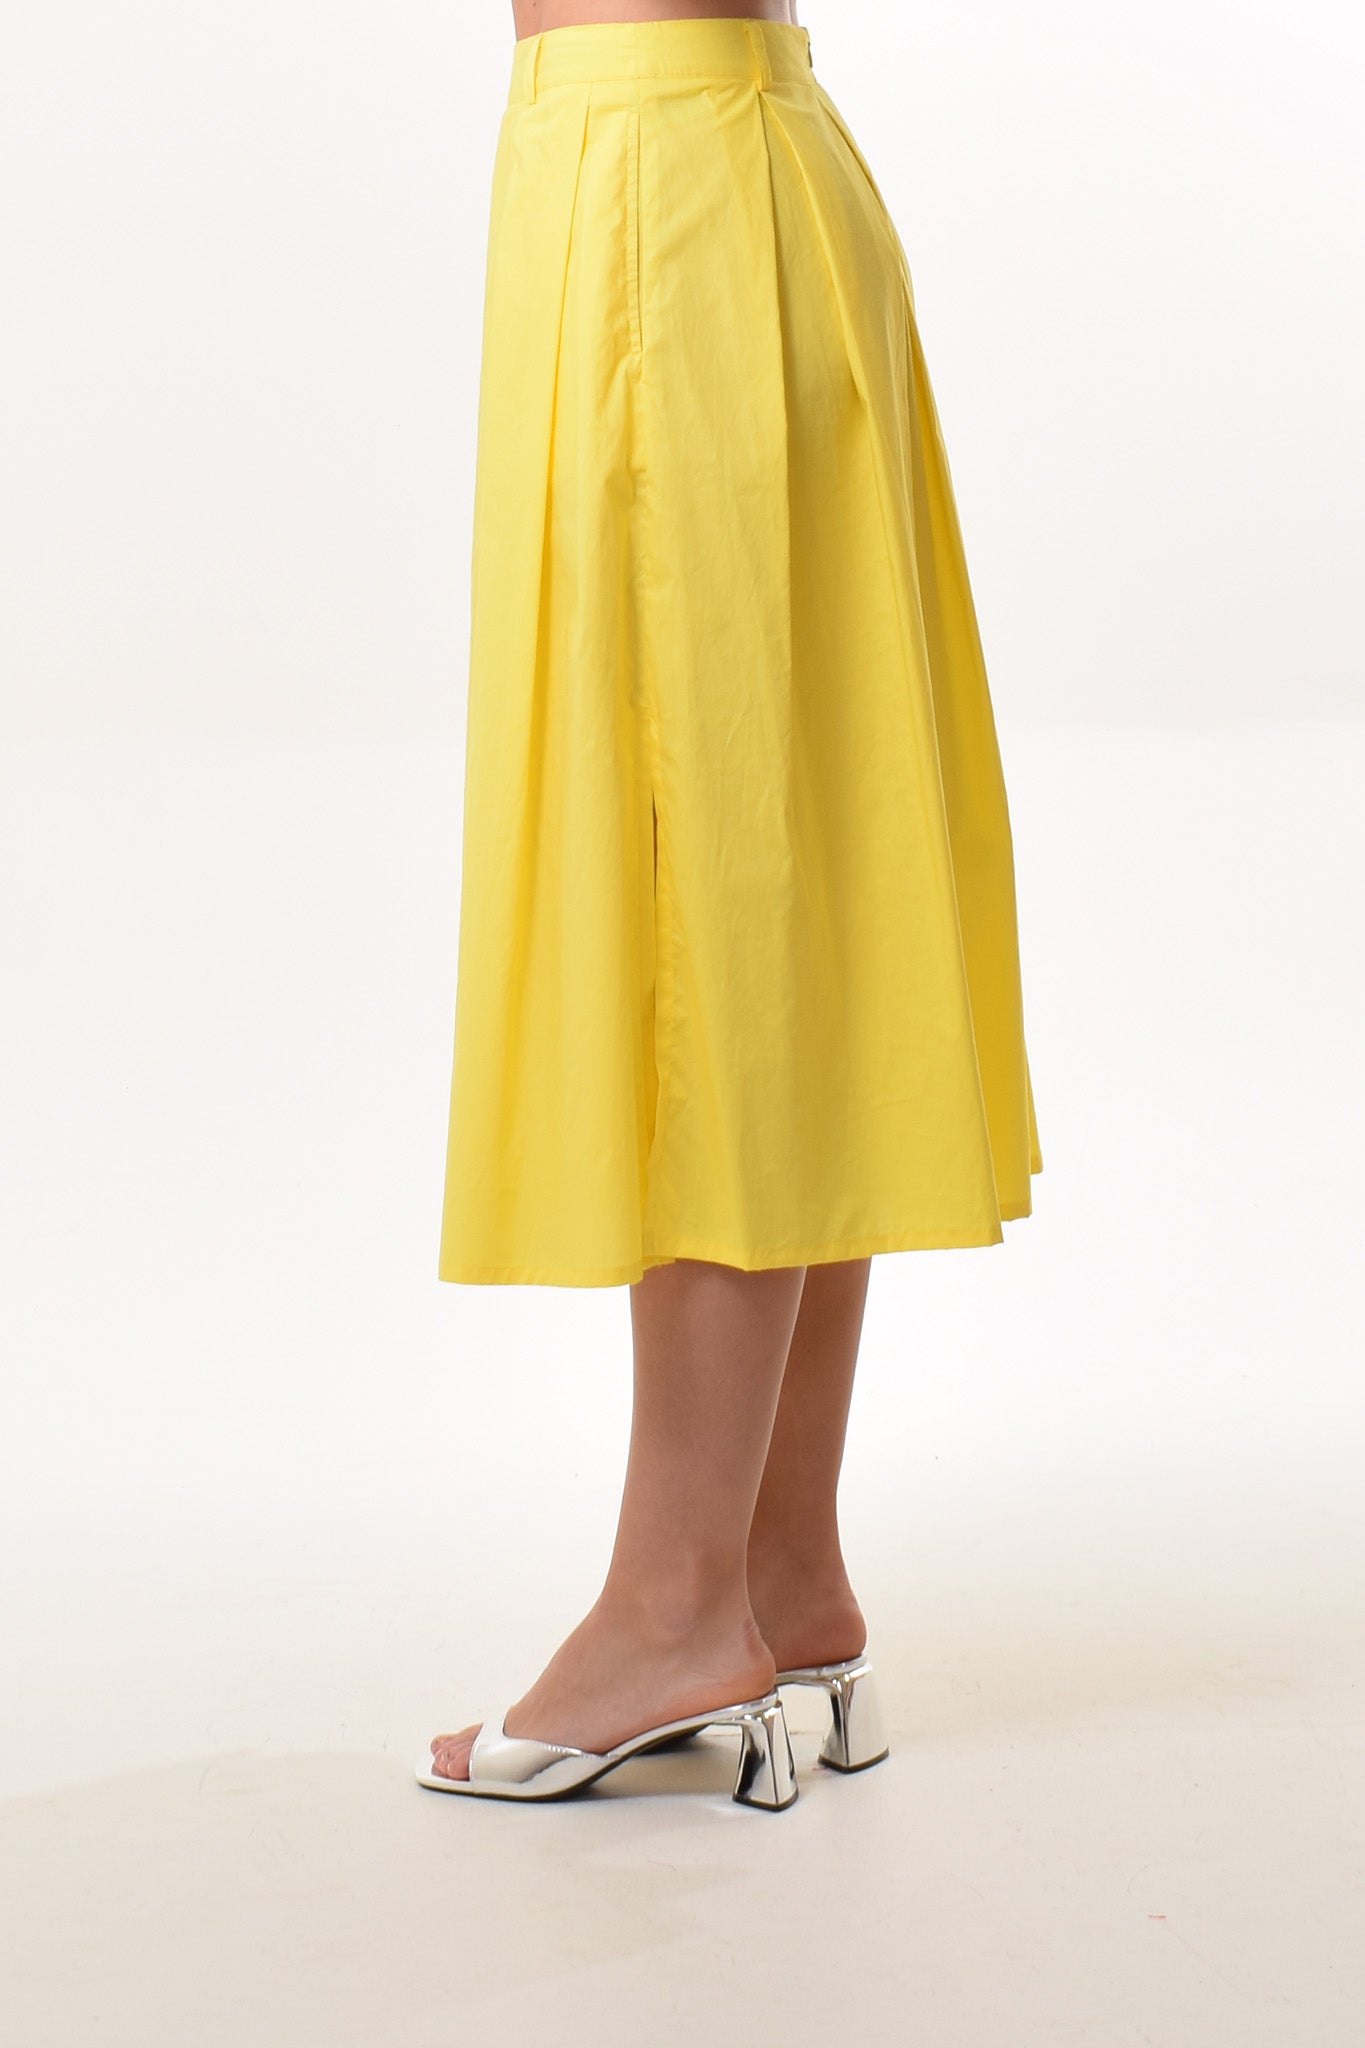 Fargo skirt in Yellow (cotton)